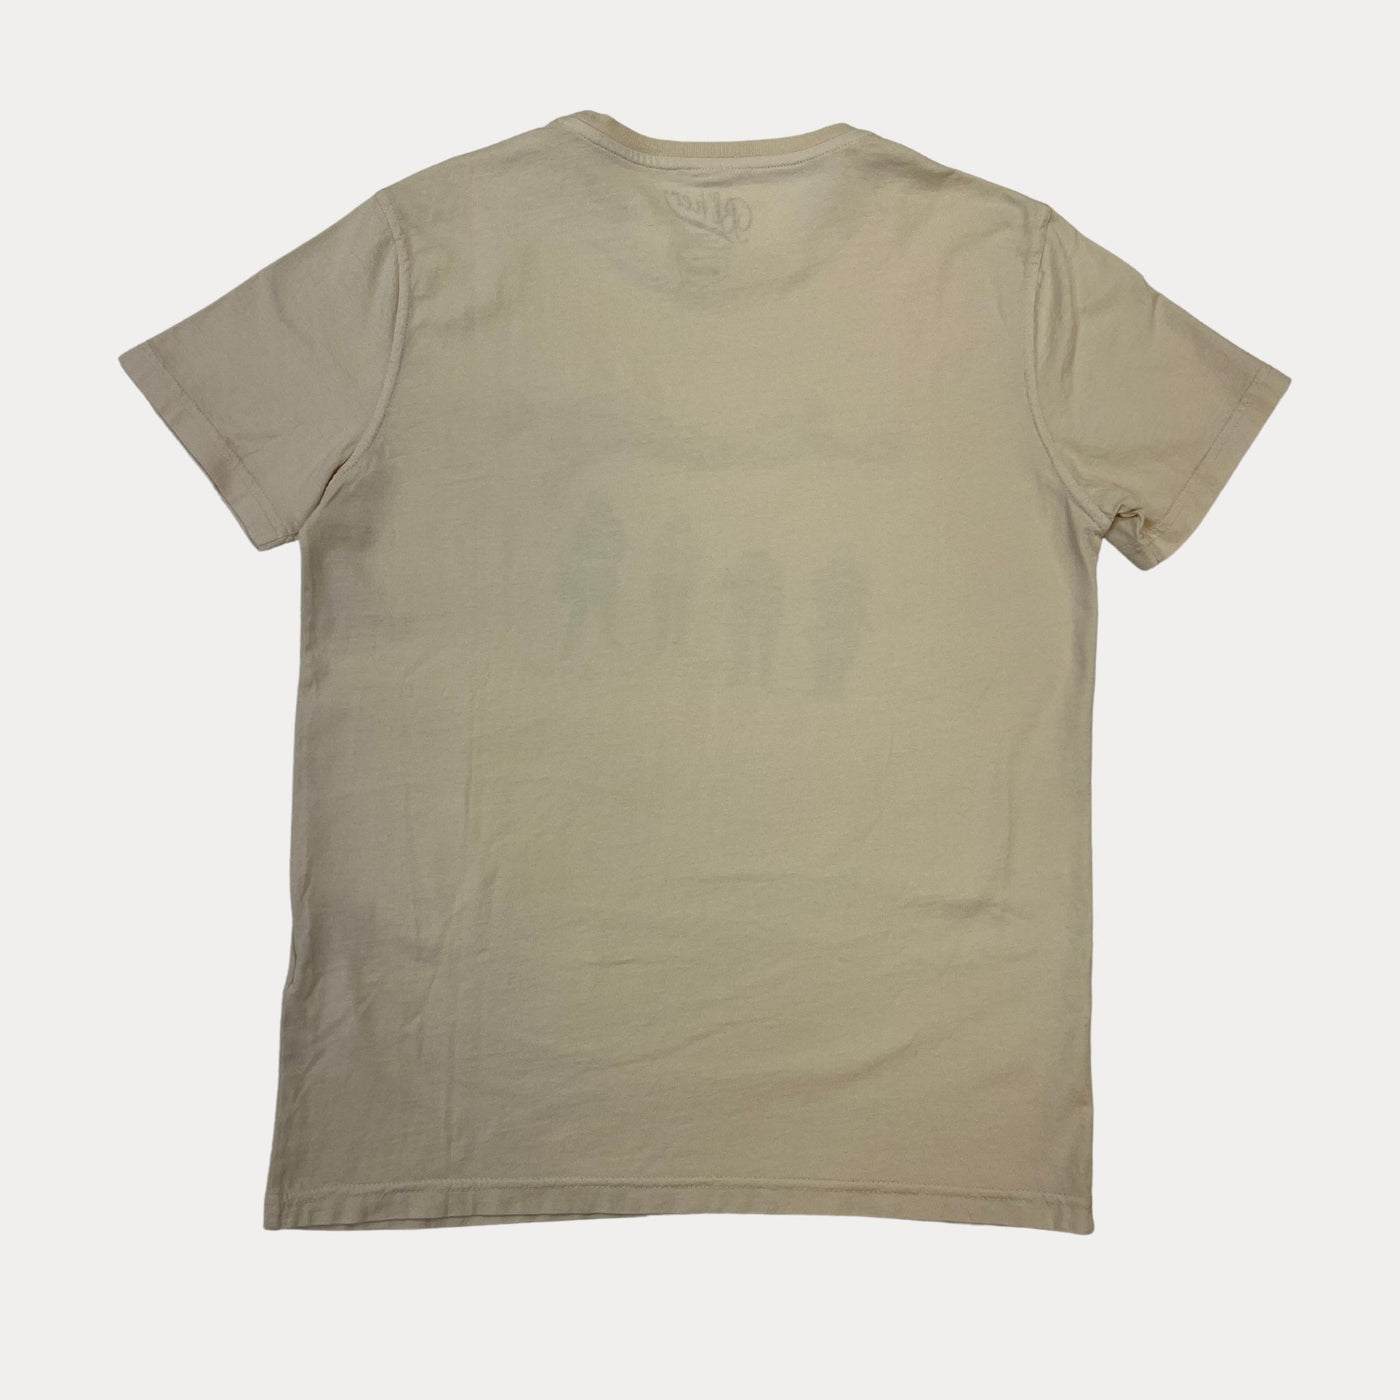 T-shirt da uomo beige firmata Bl'ker vista retro